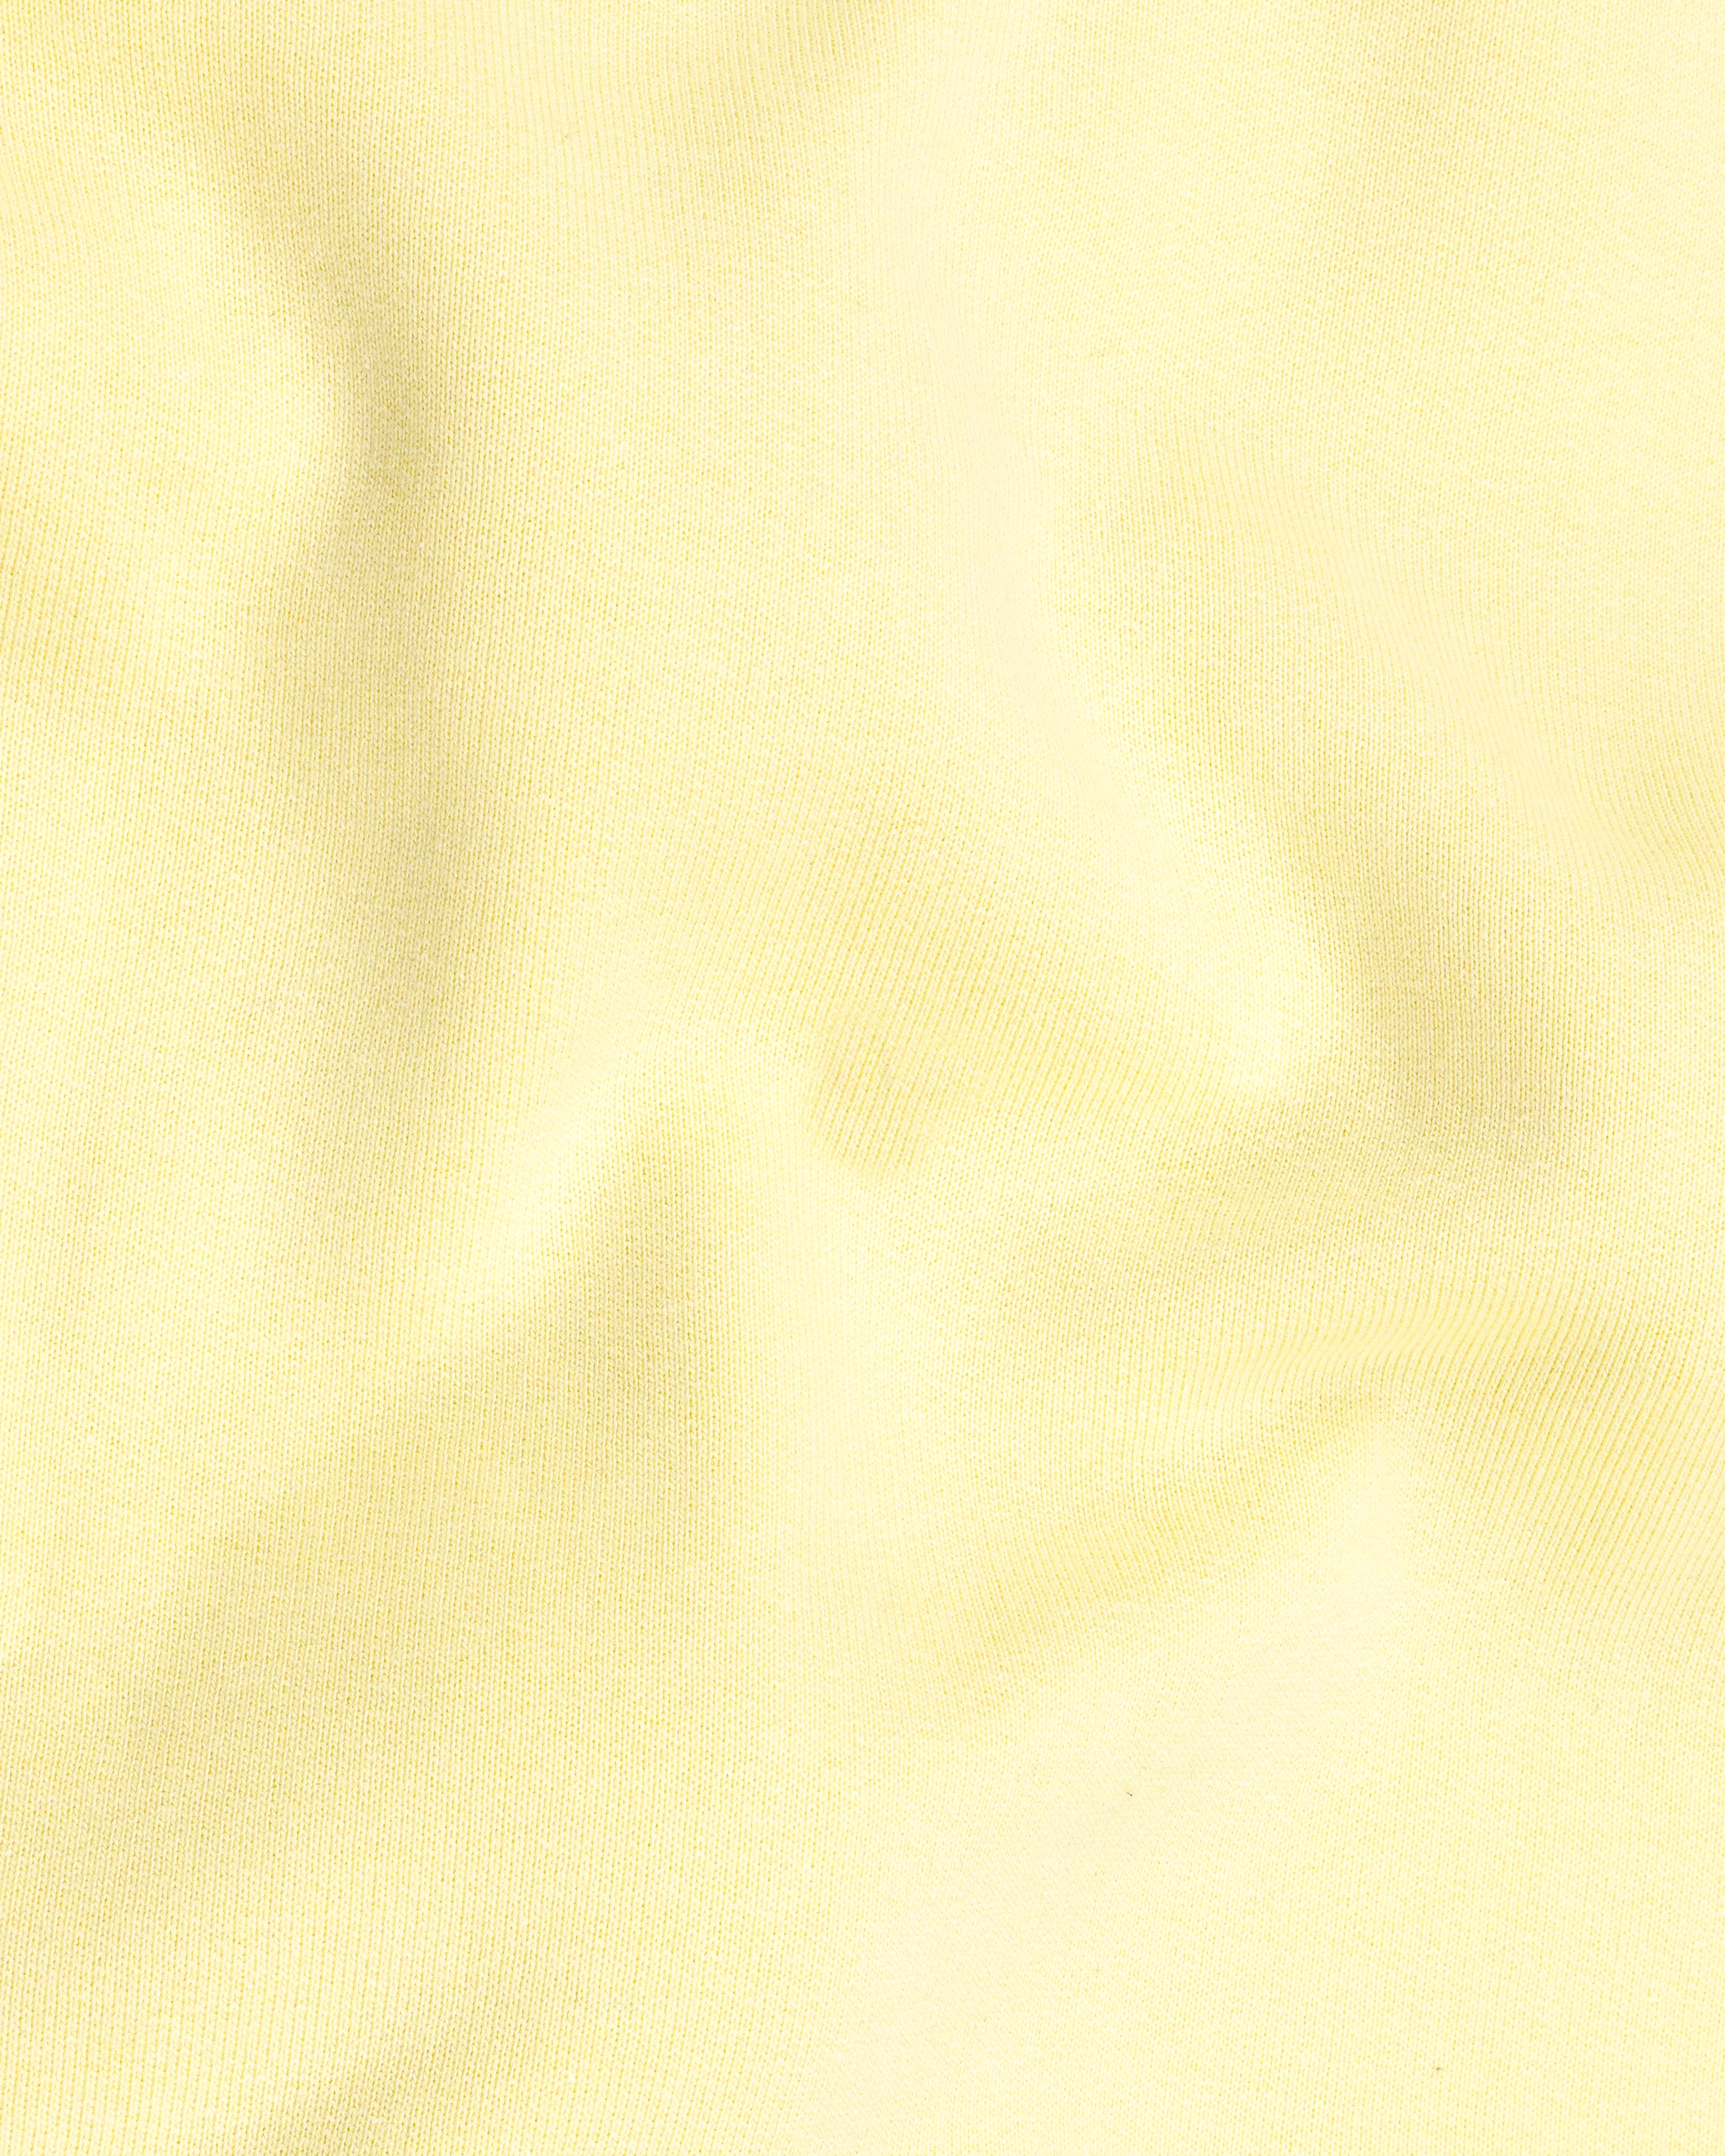 Beeswax Yellow Premium Cotton Sweatshirt with Shorts Combo TS617-SR172-S, TS617-SR172-M, TS617-SR172-L, TS617-SR172-XL, TS617-SR172-XXL